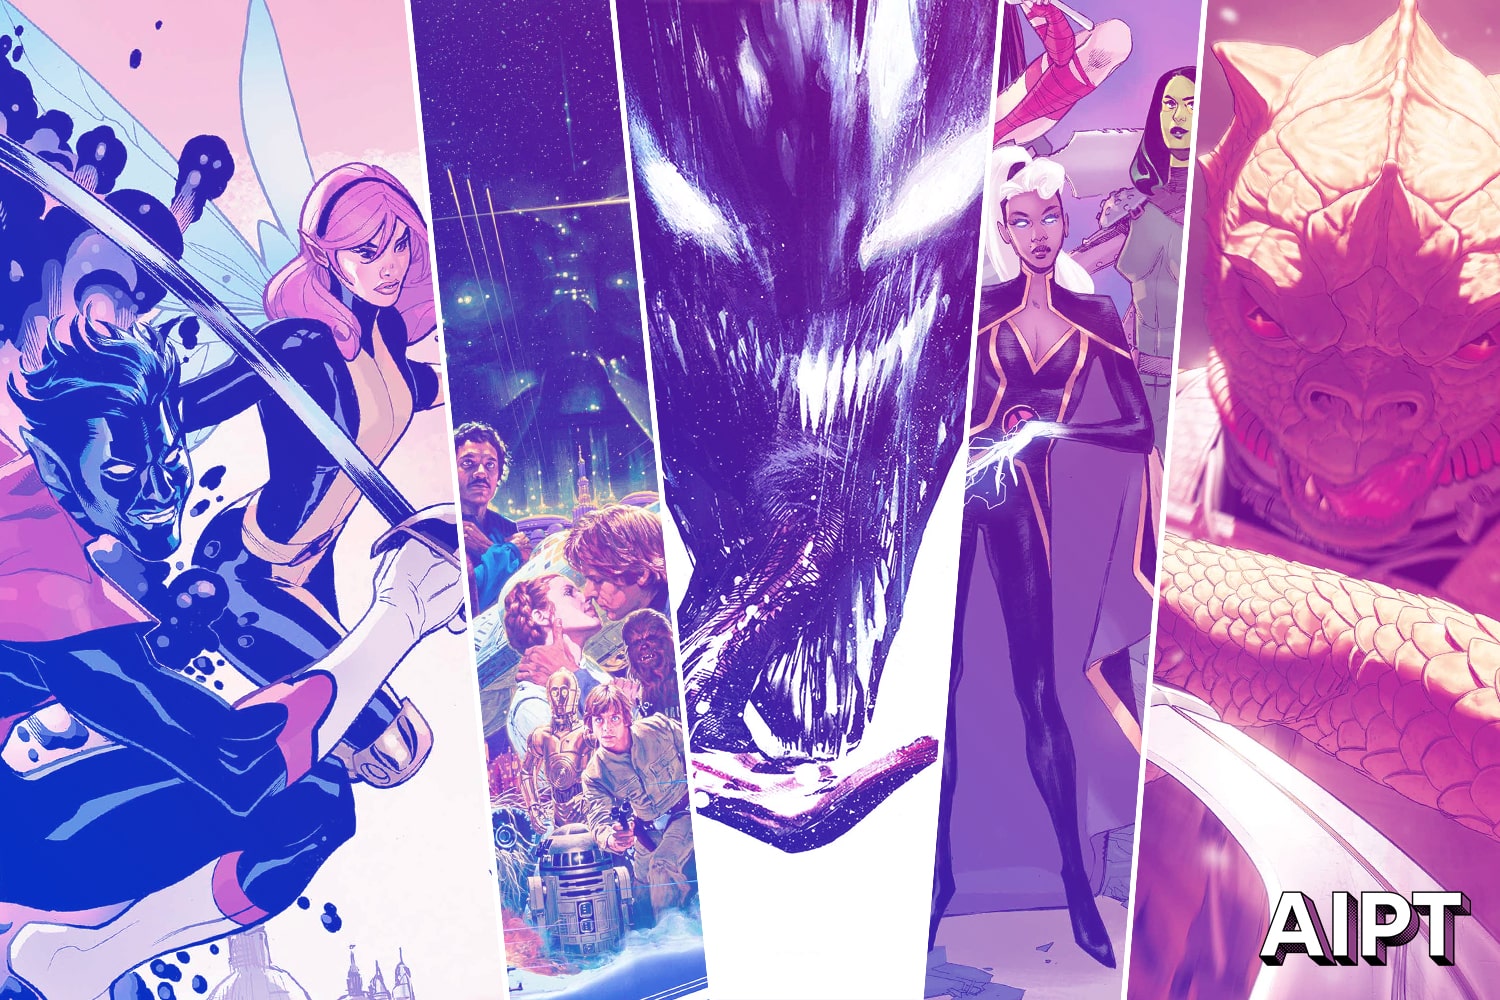 April 2021 Marvel Comics solicitations: X-Men expands and celebrating Star Wars